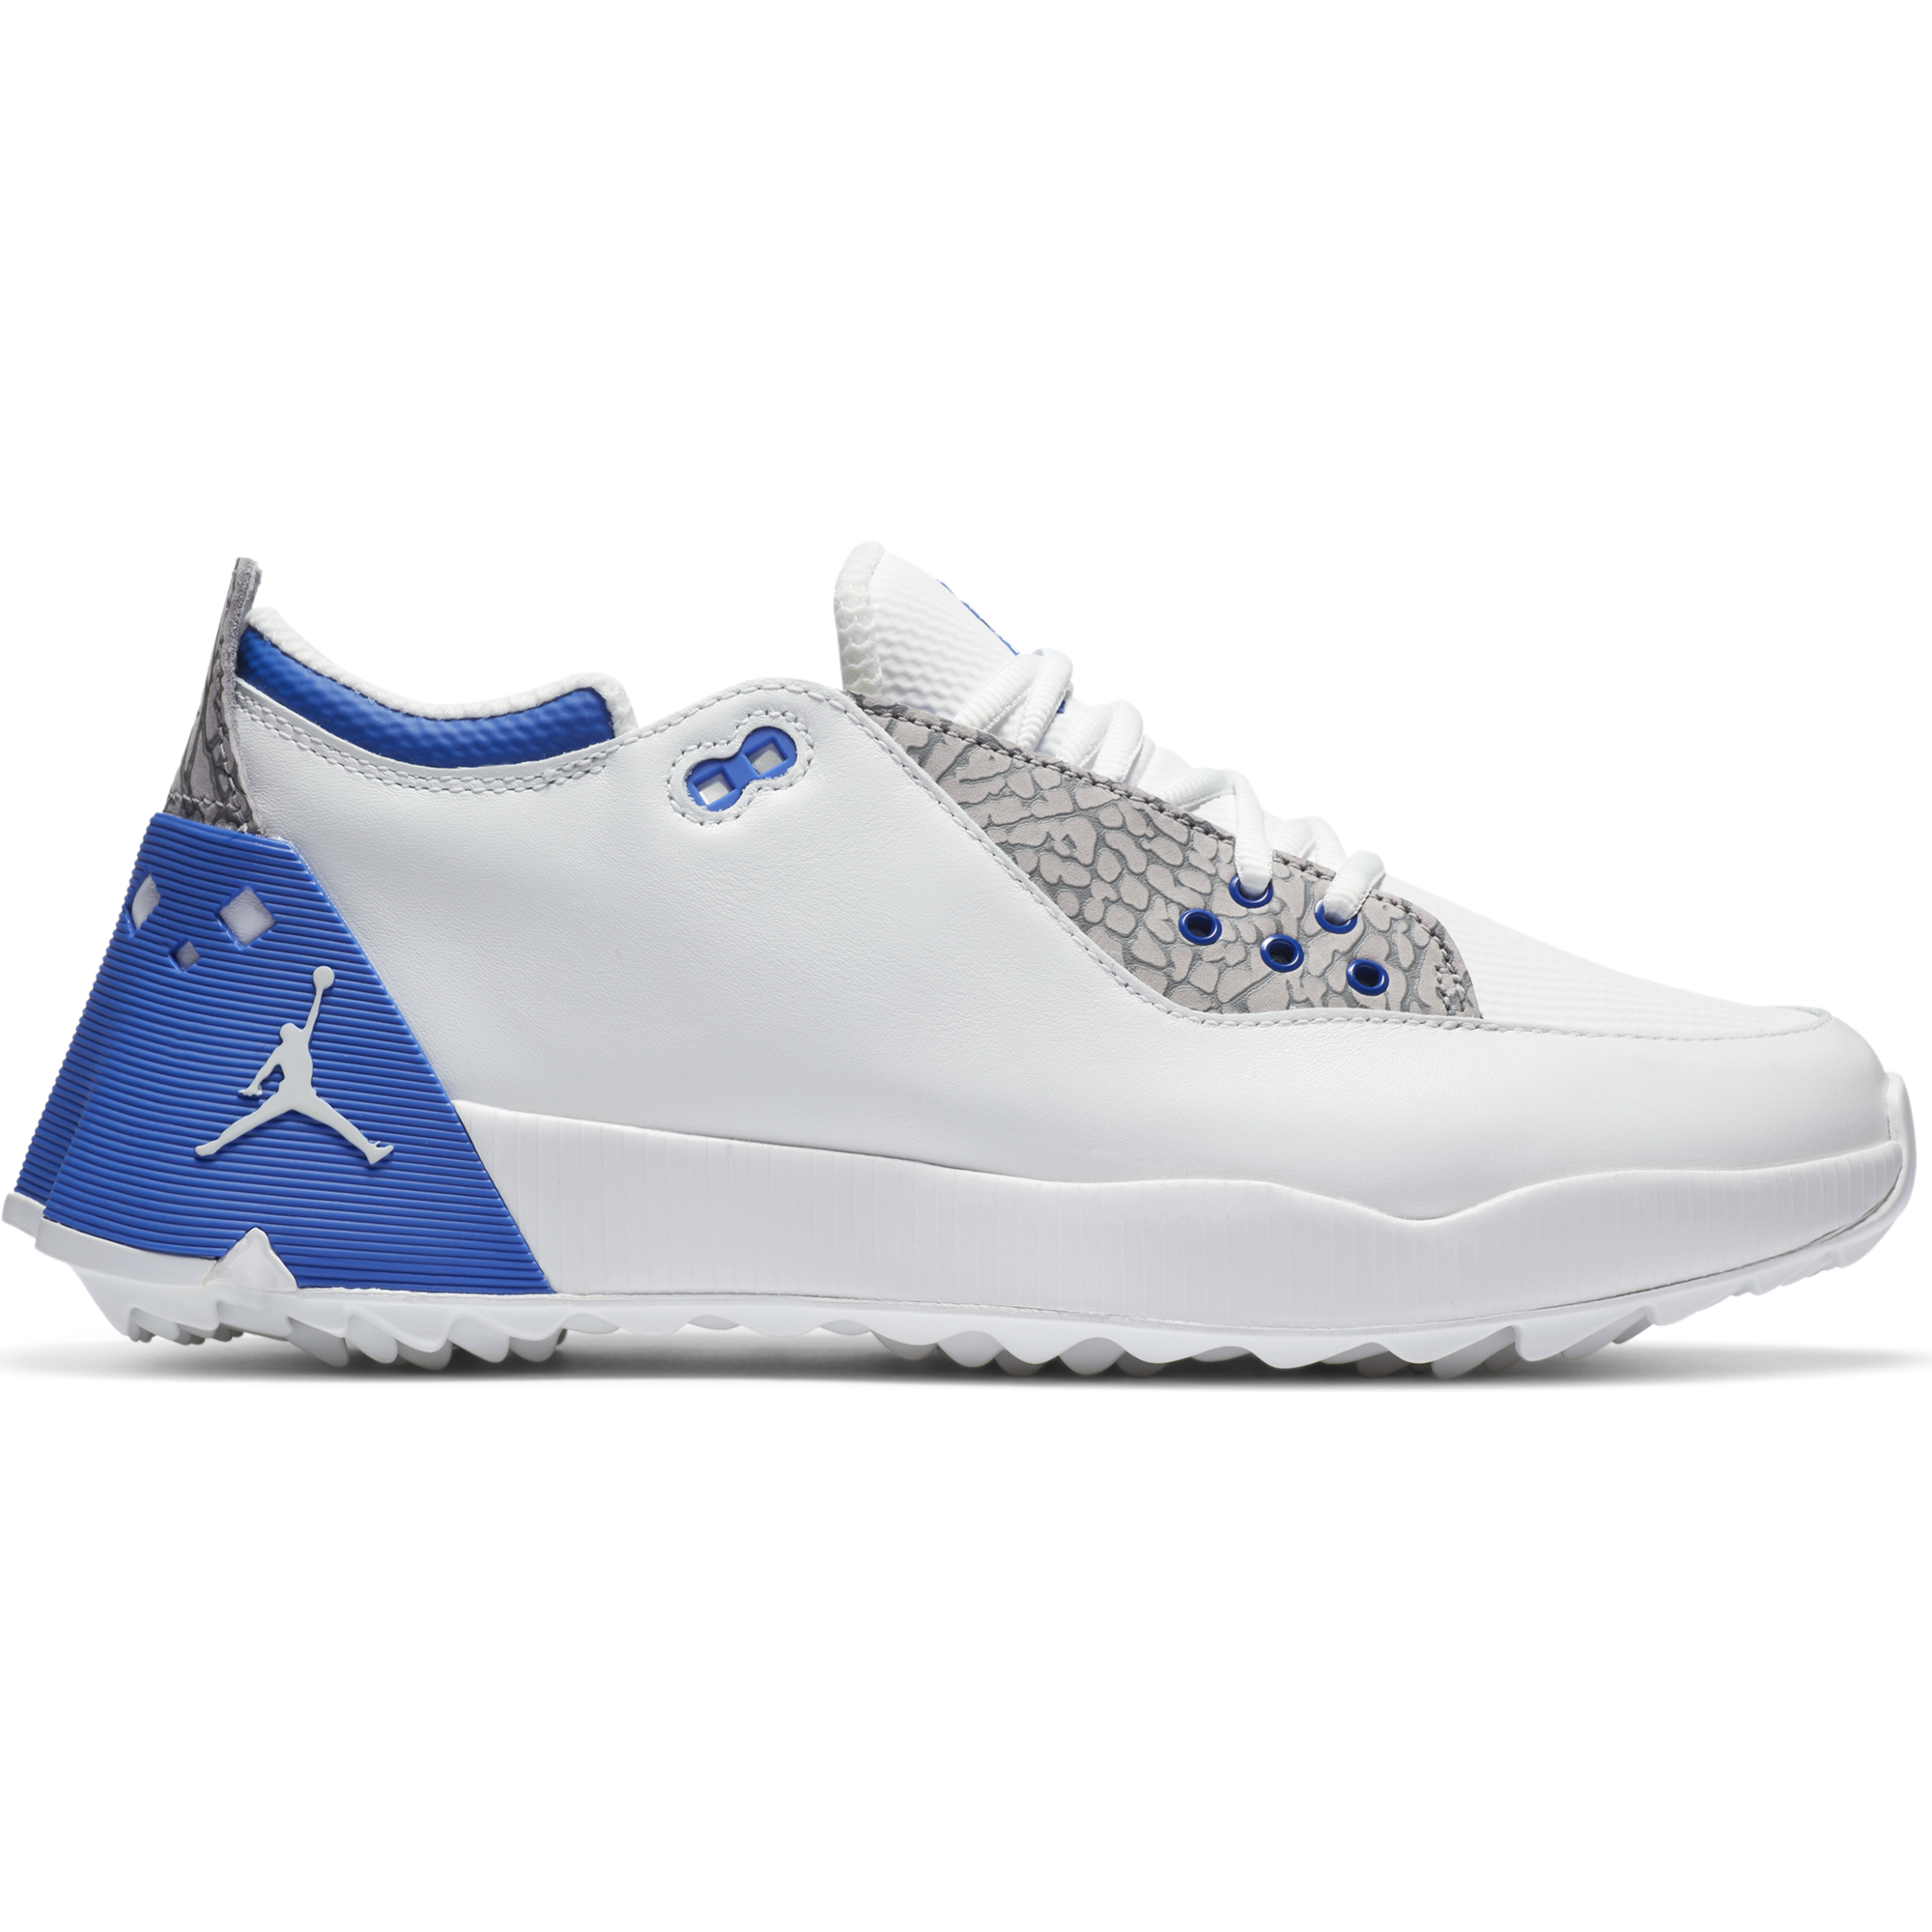 jordan adg white golf shoes